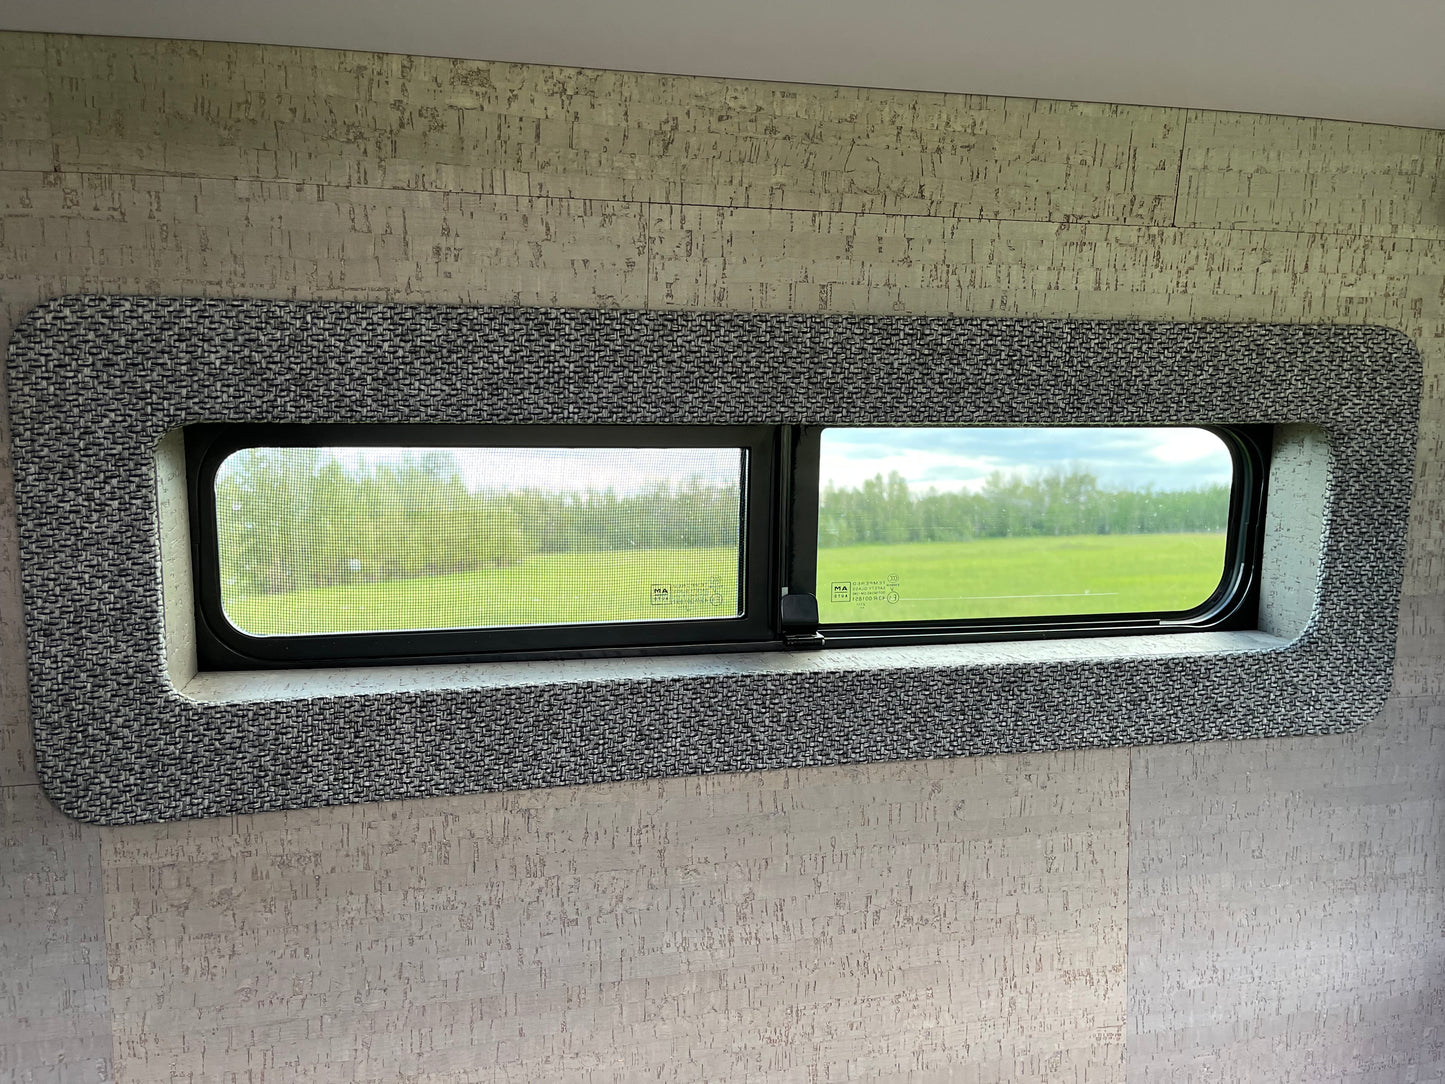 Interior view of the AMA sliding window for van.